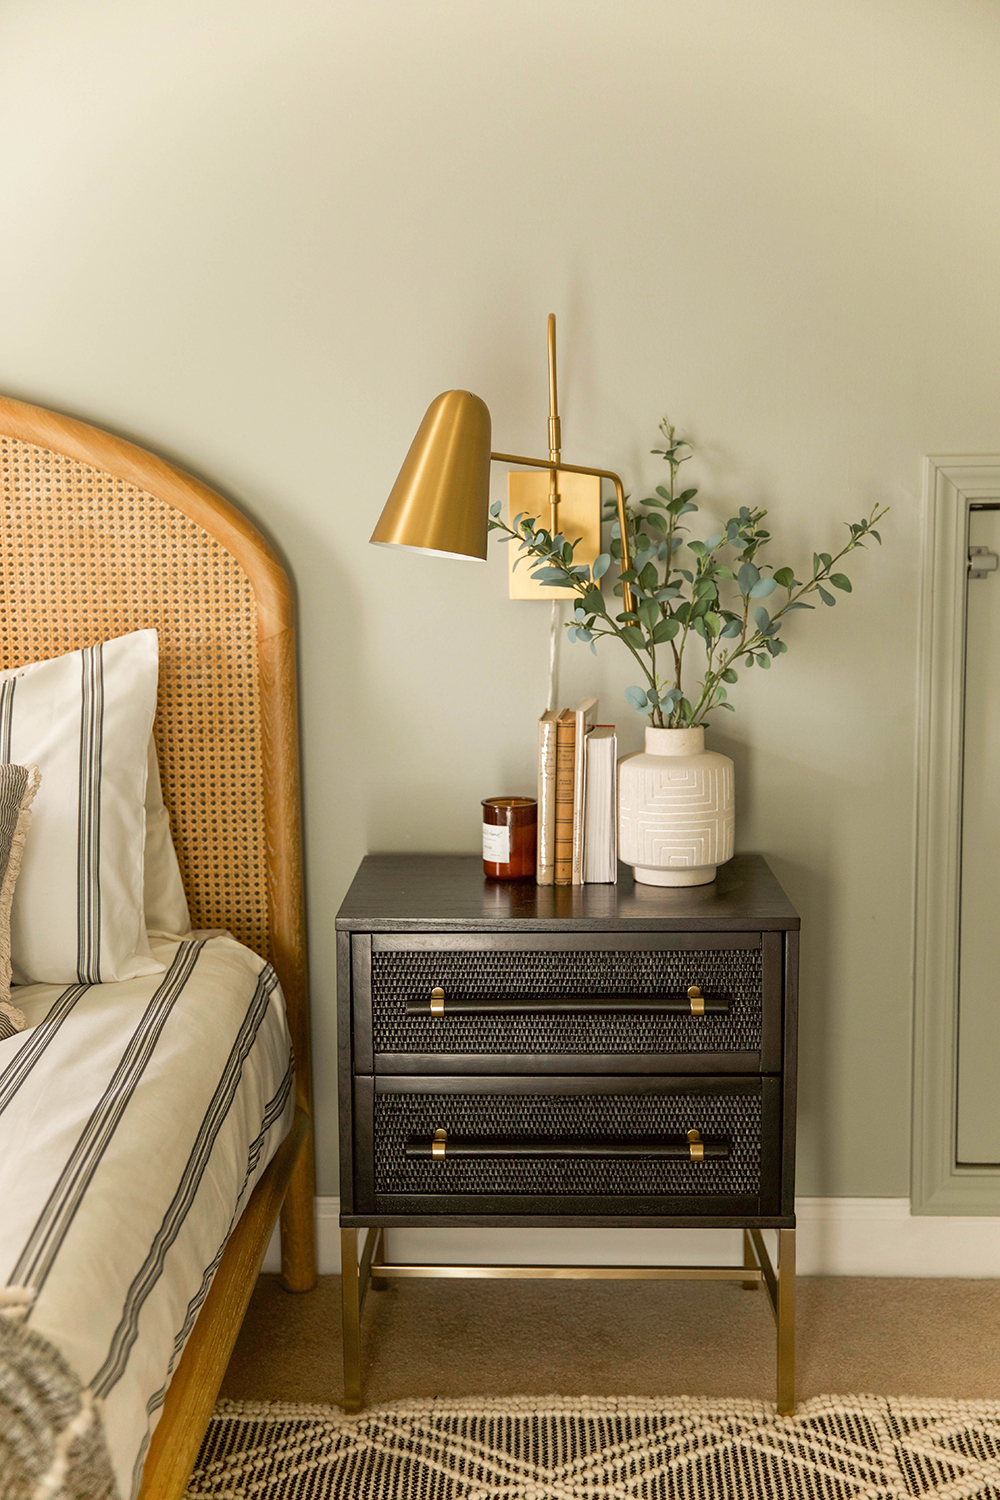 Creatice Guest Bedroom Nightstand Ideas for Simple Design